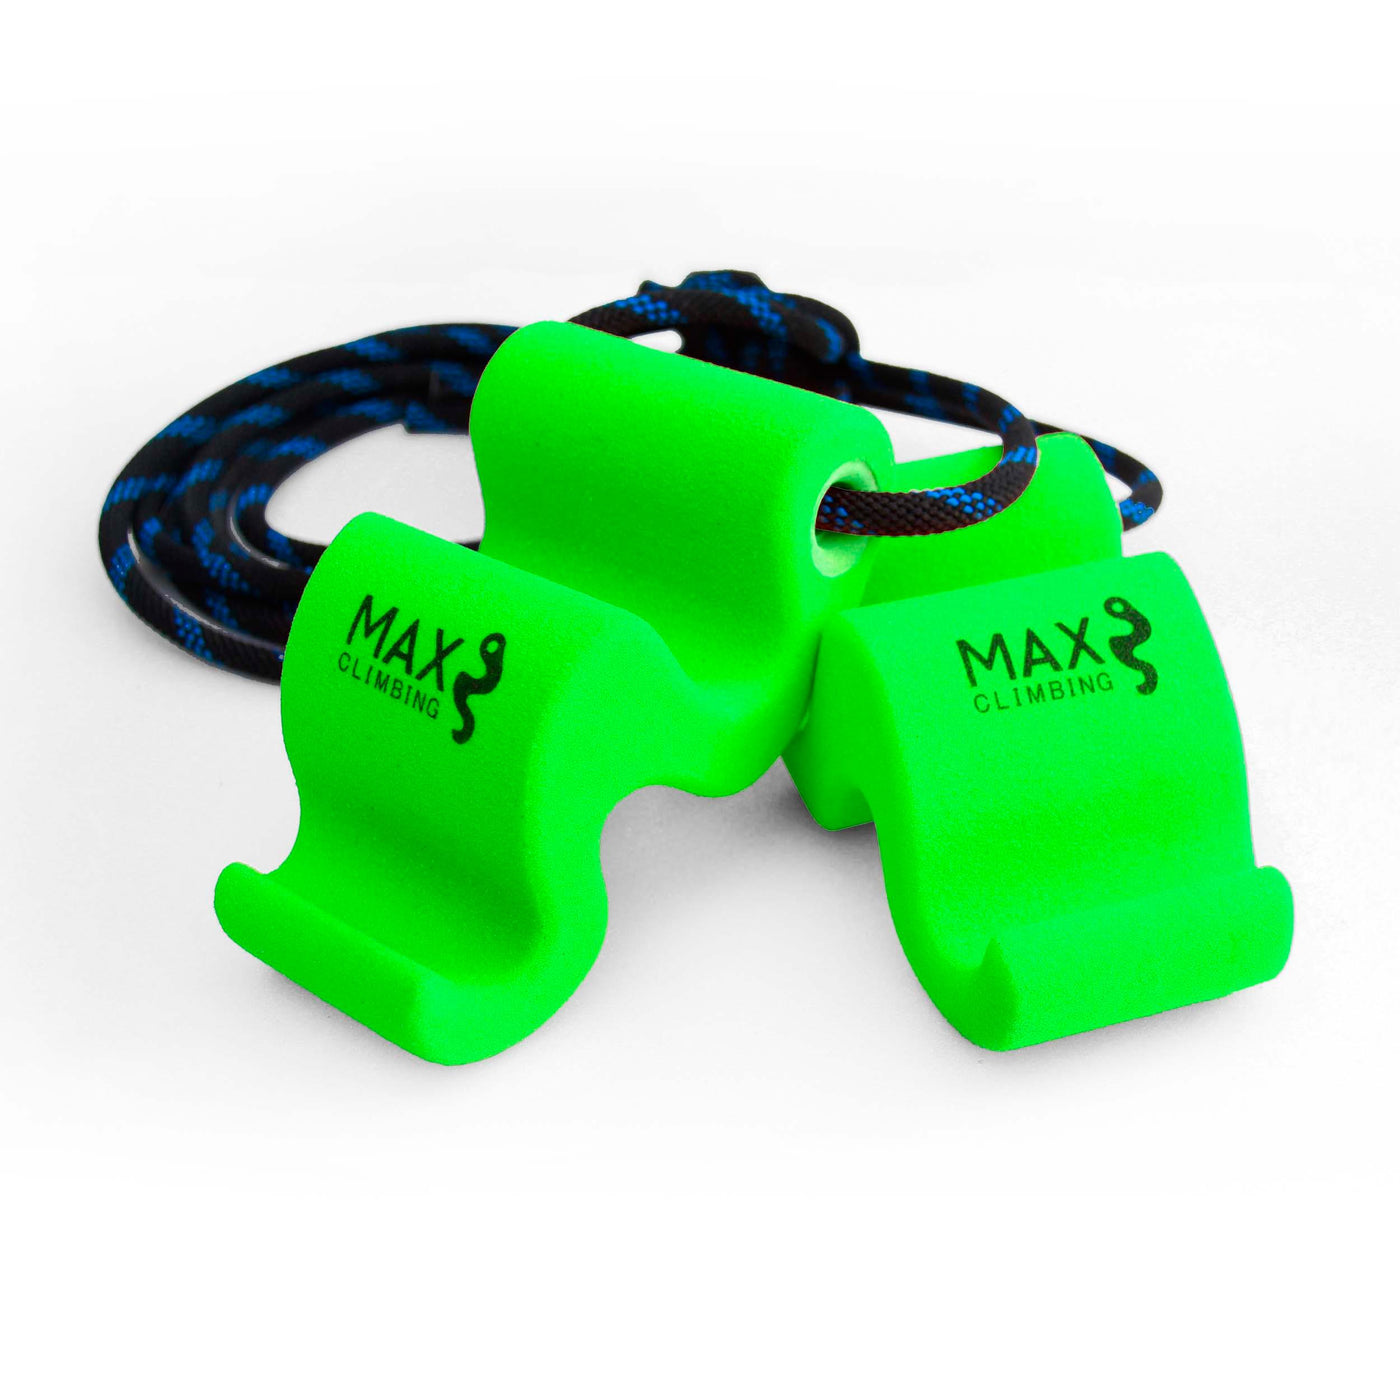 Maxgrip - Max Climbing - training tool - climbing green